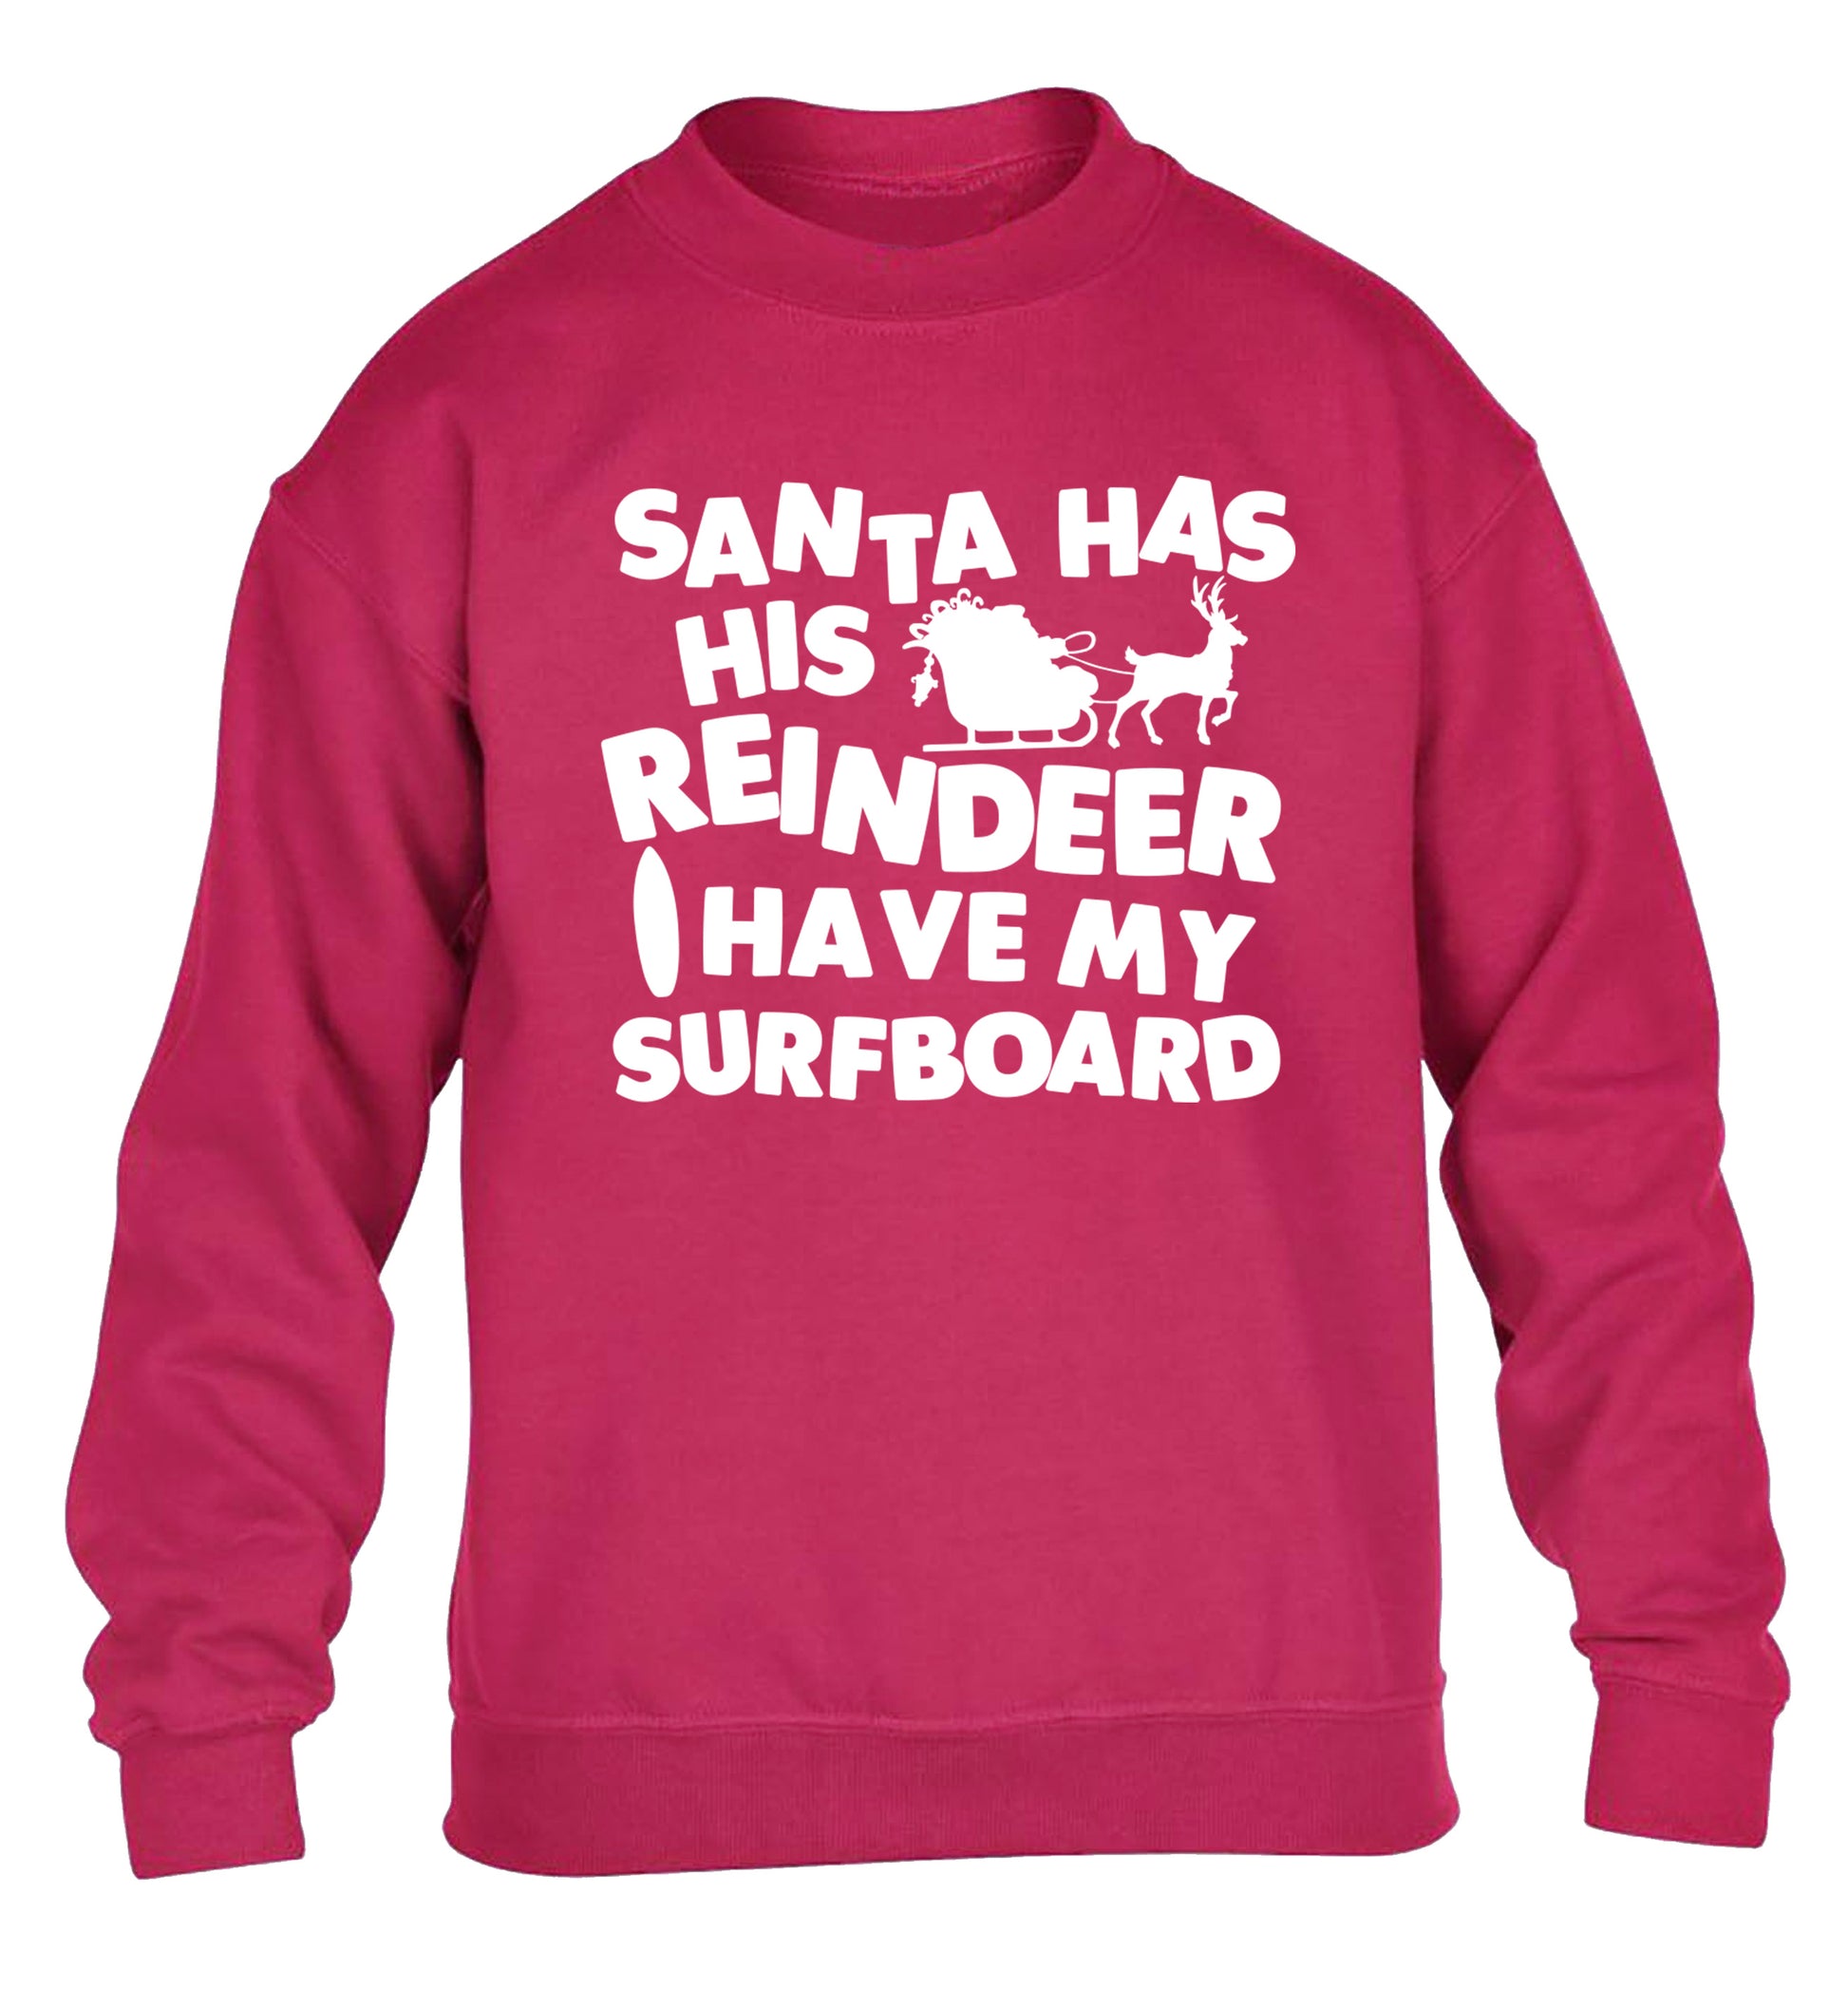 Santa has his reindeer I have my surfboard children's pink sweater 12-14 Years